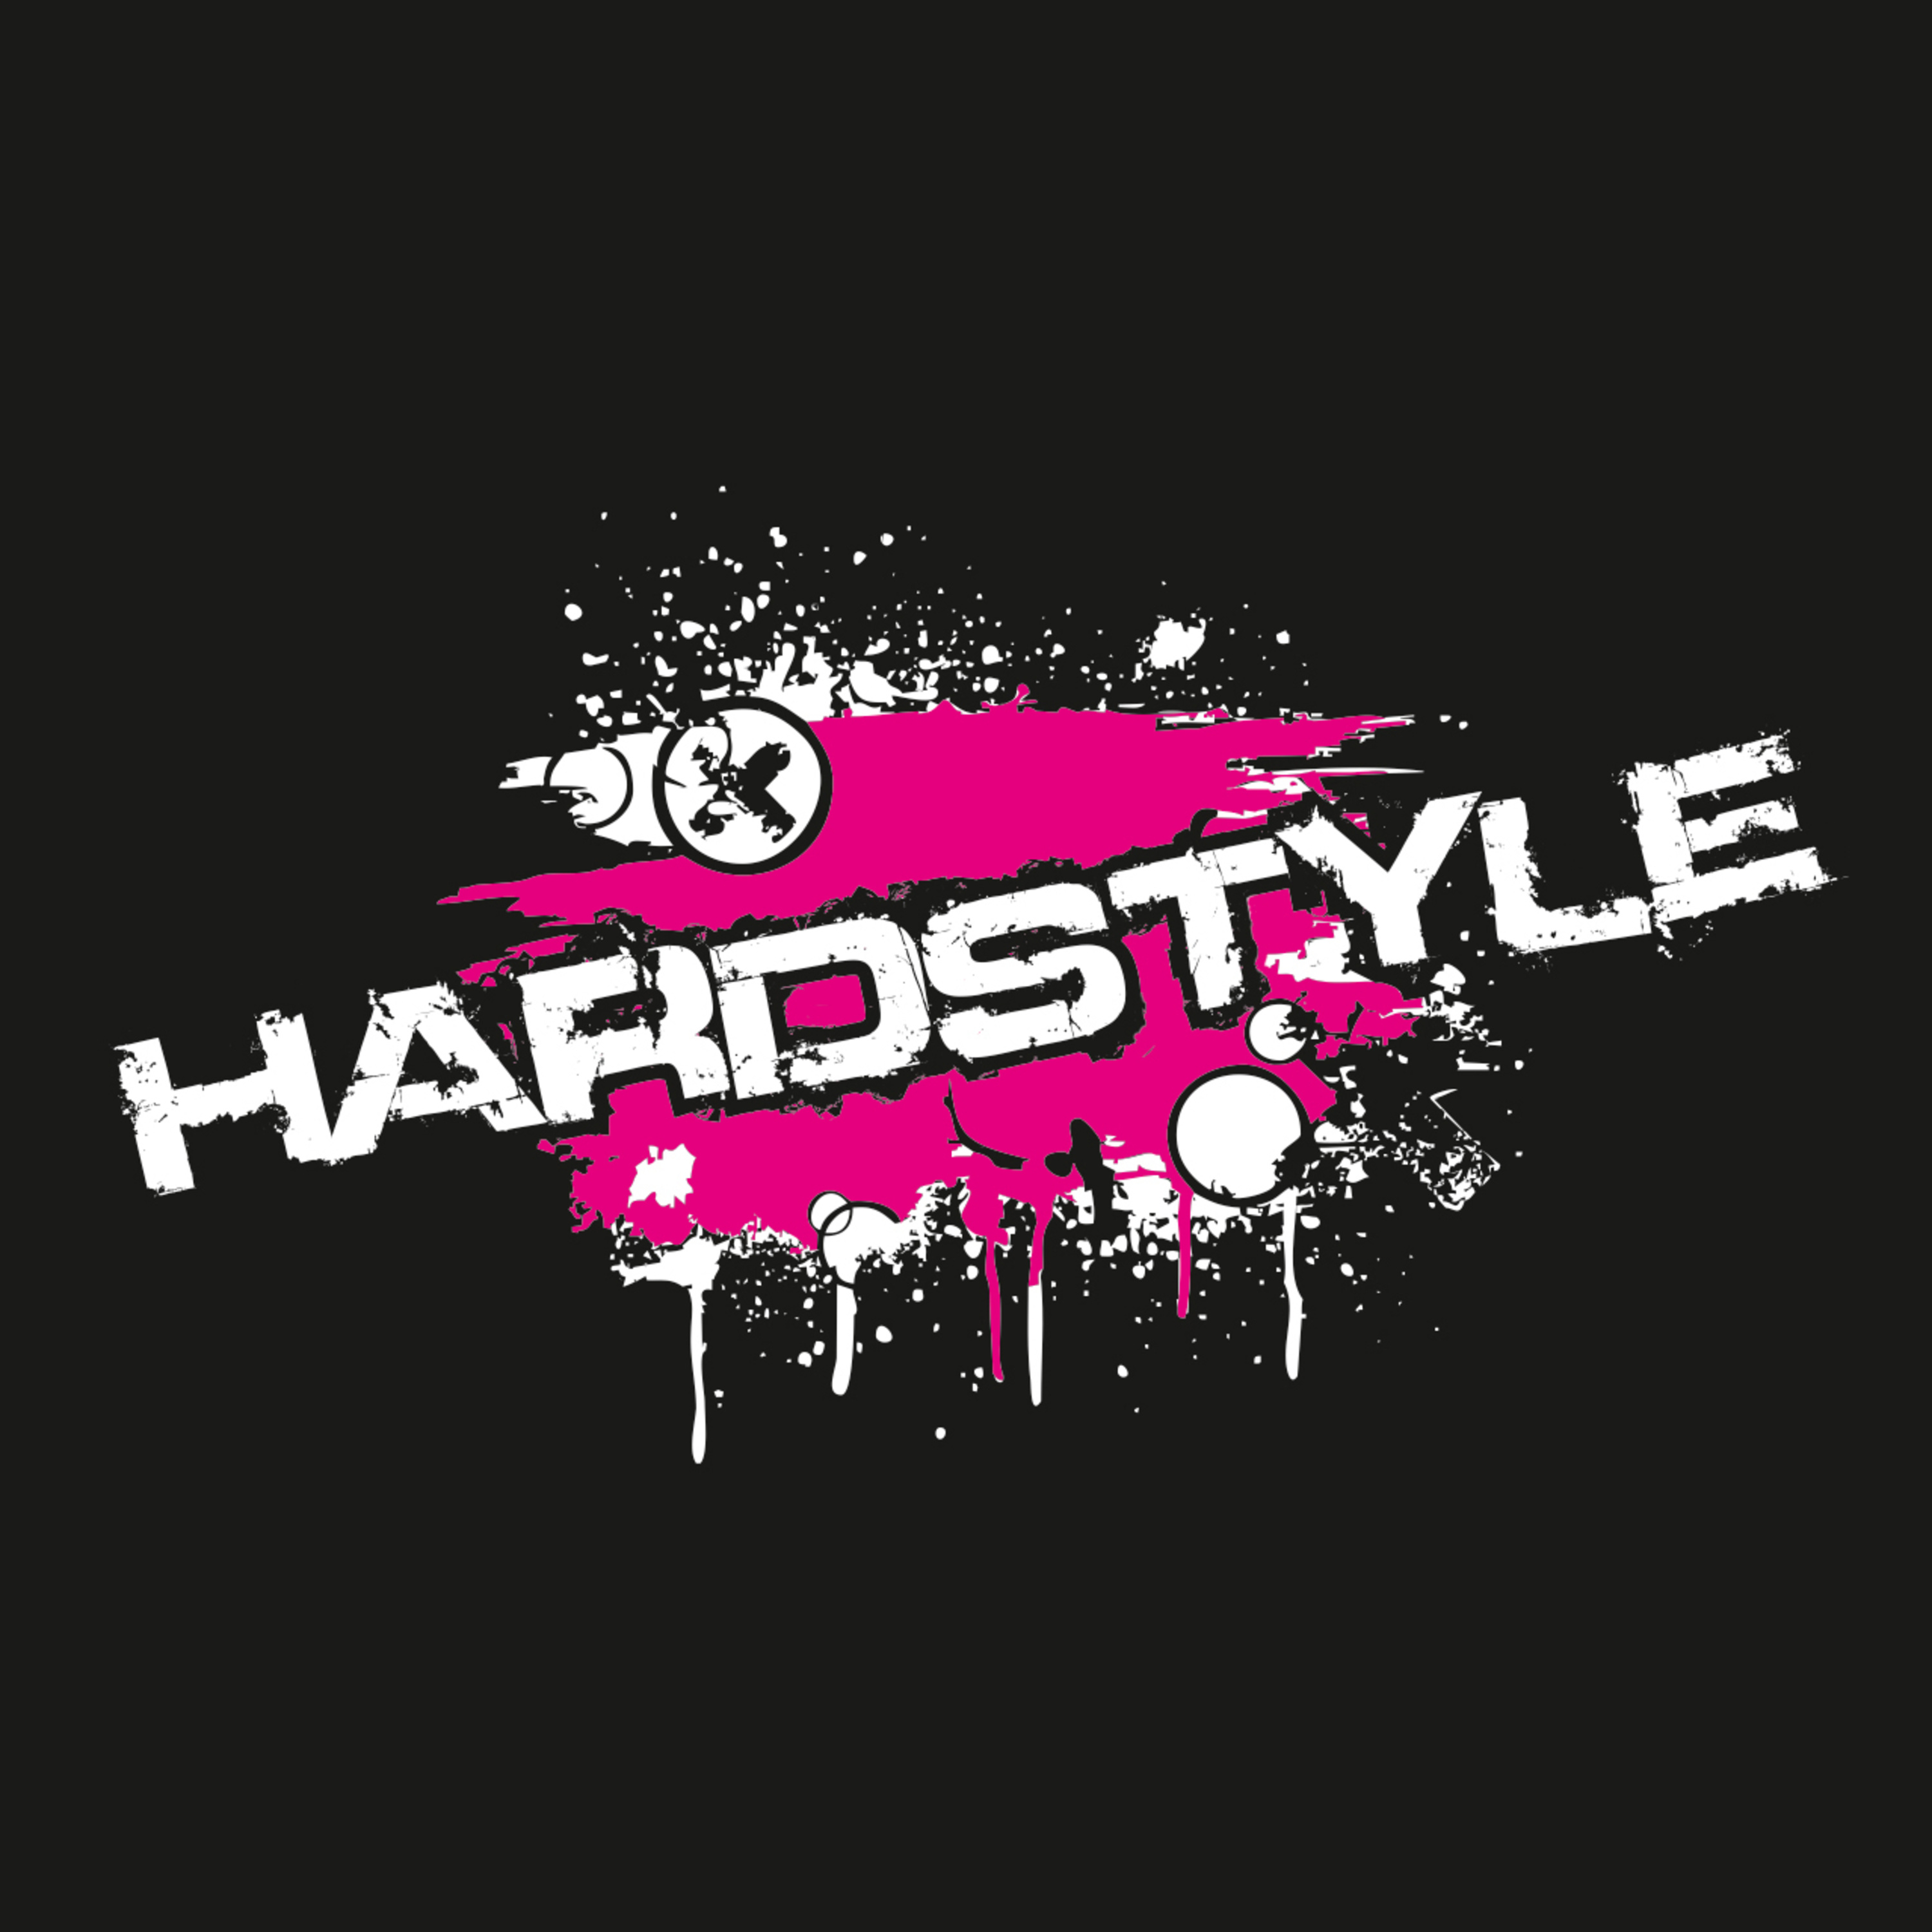 16-01-2021 Live Stream #HardStyle